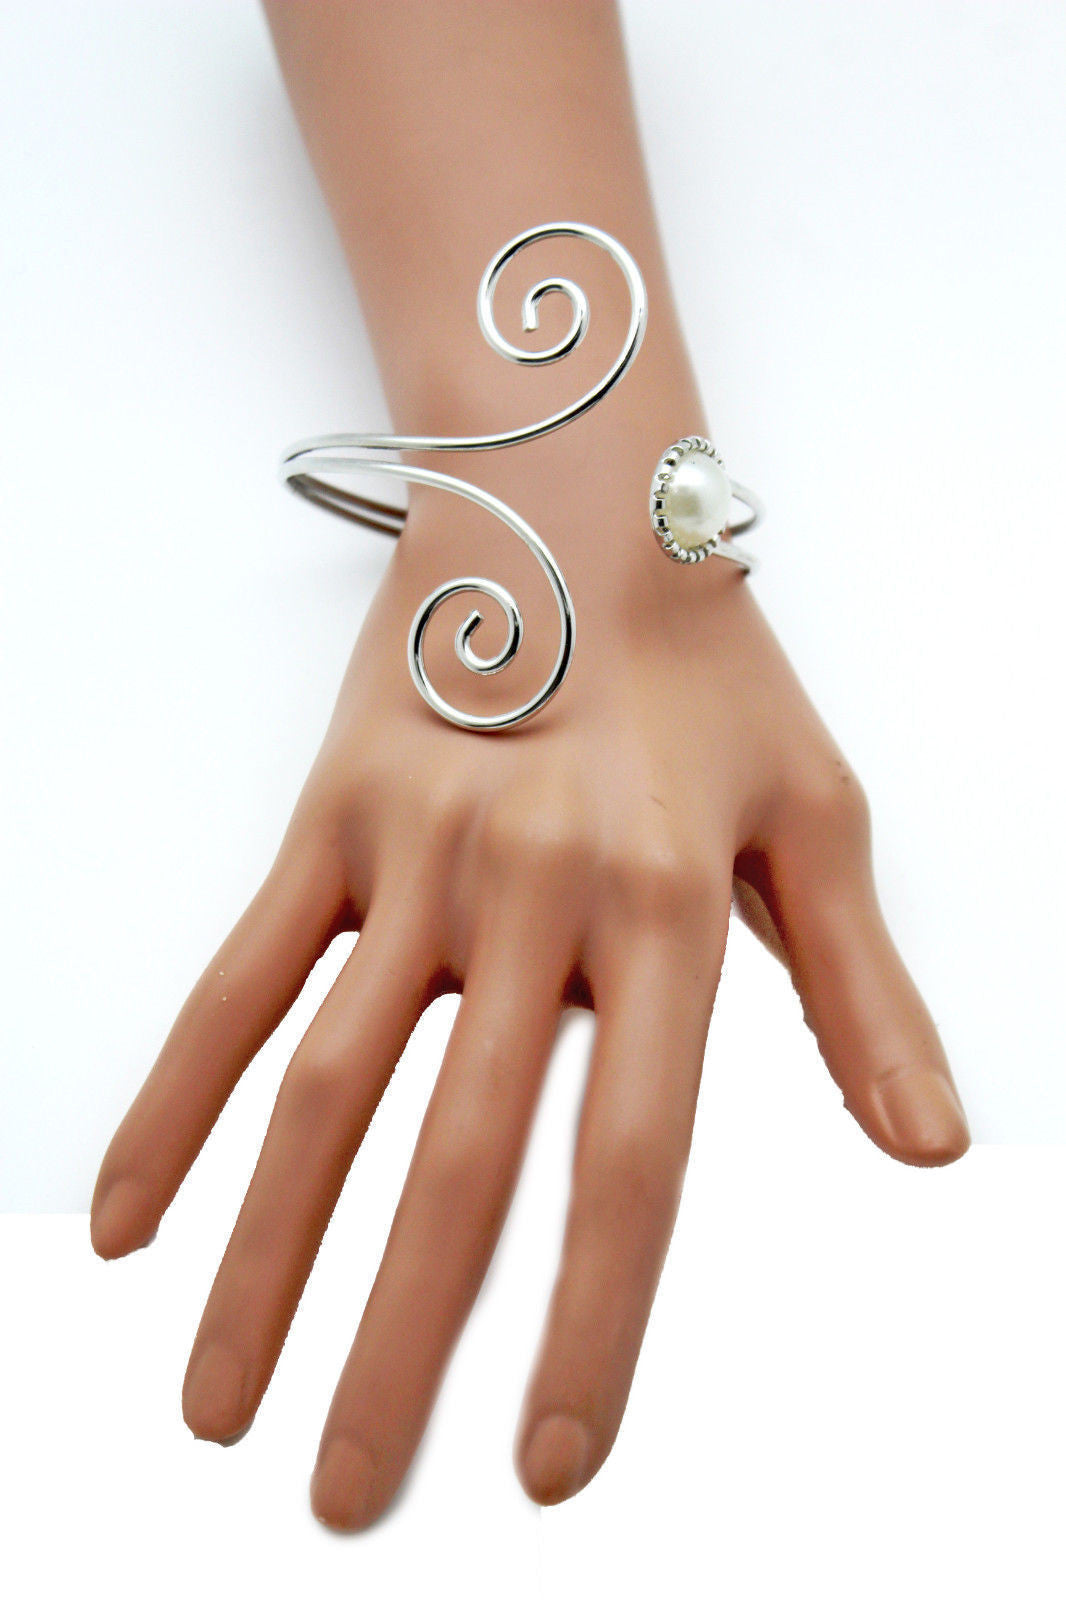 Silver Metal Cuff Bracelet Bangle Geometric Wrap Around Big Bead And Rhinestones Adjustable Women Fashion Jewelry Accessories - alwaystyle4you - 1